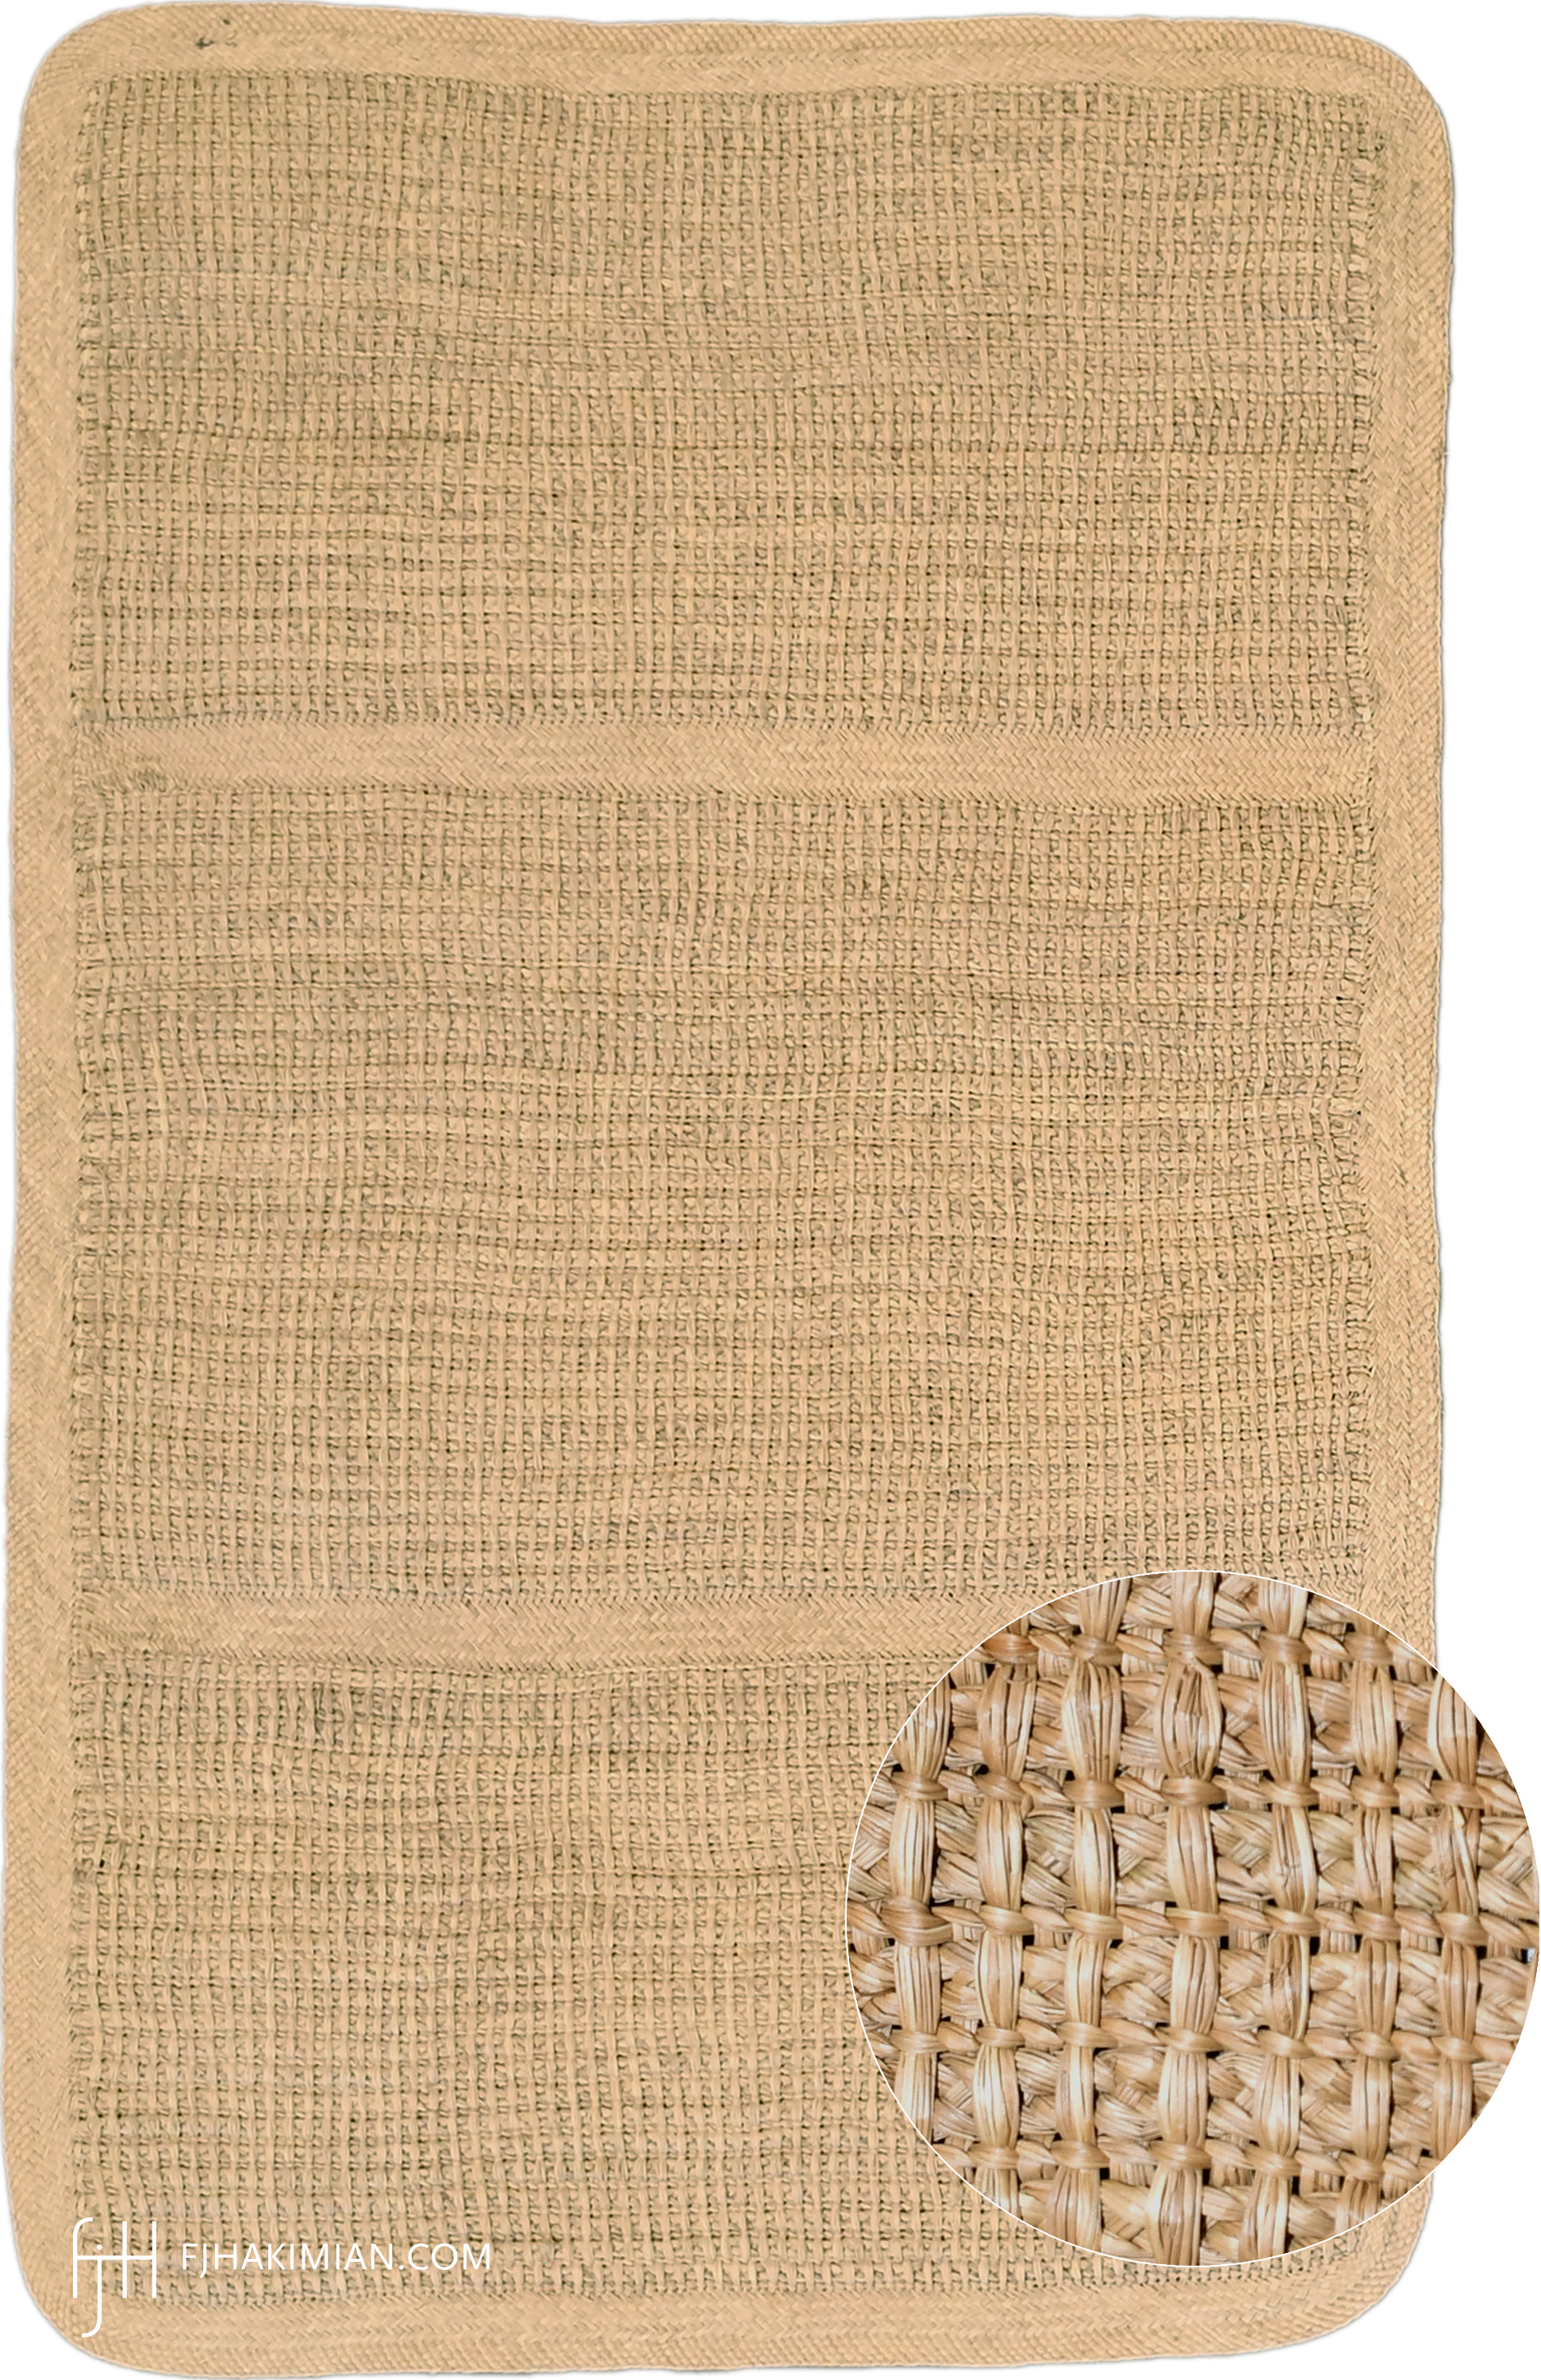 South American Mat #21588 | FJ Hakimian | Carpet Gallery in New York